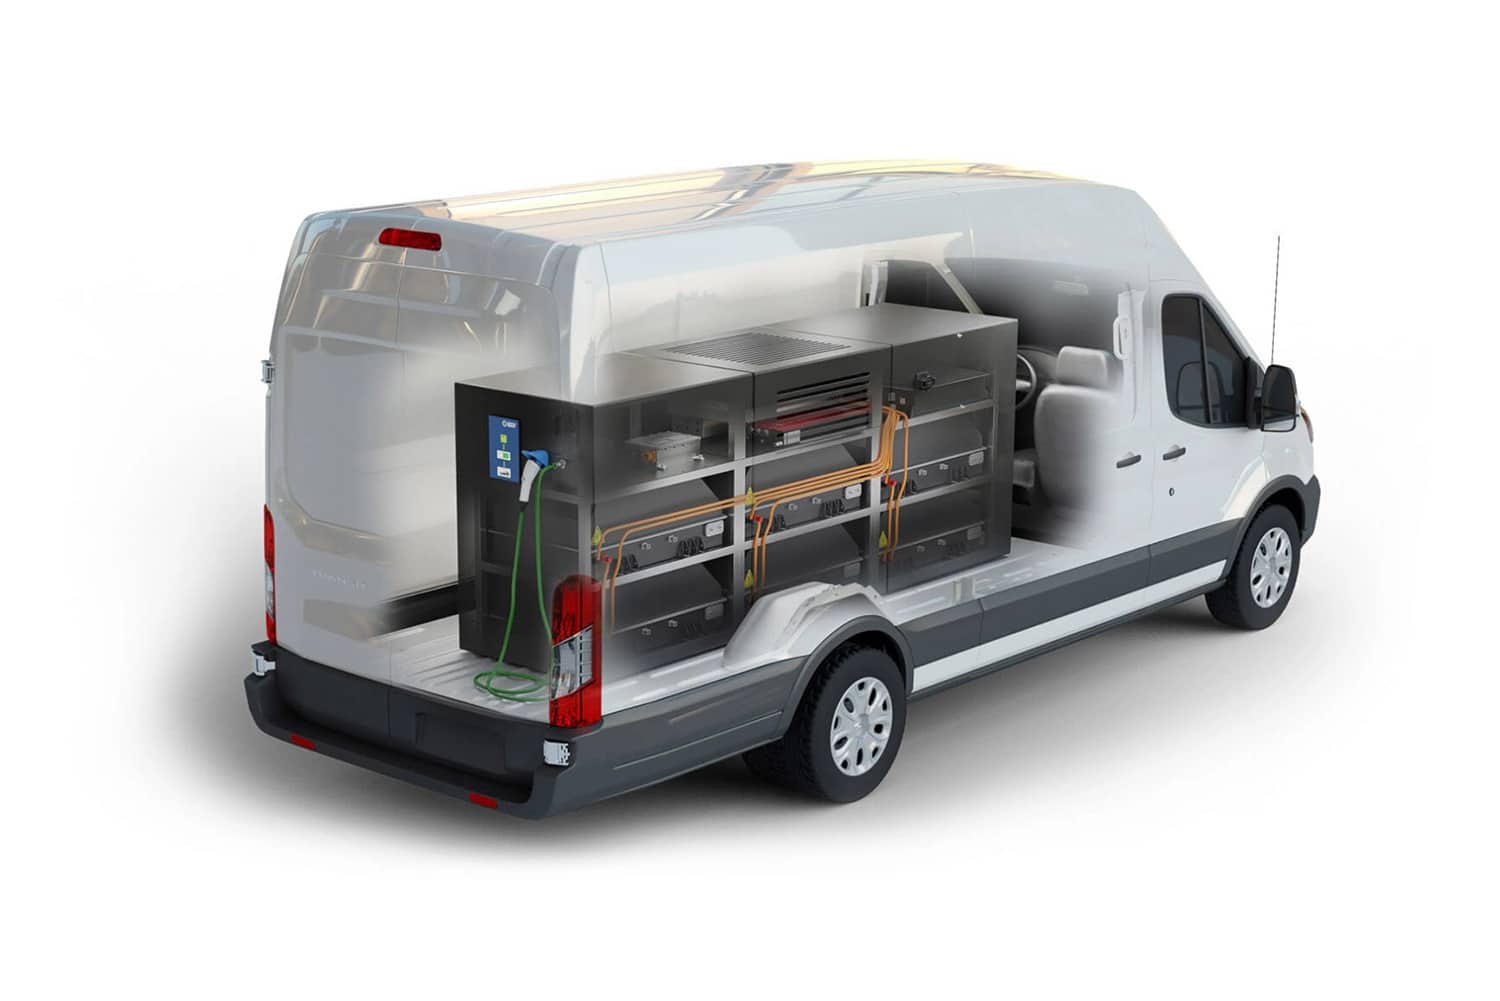 Lightning Mobile installed in Transit 350HD cargo van.